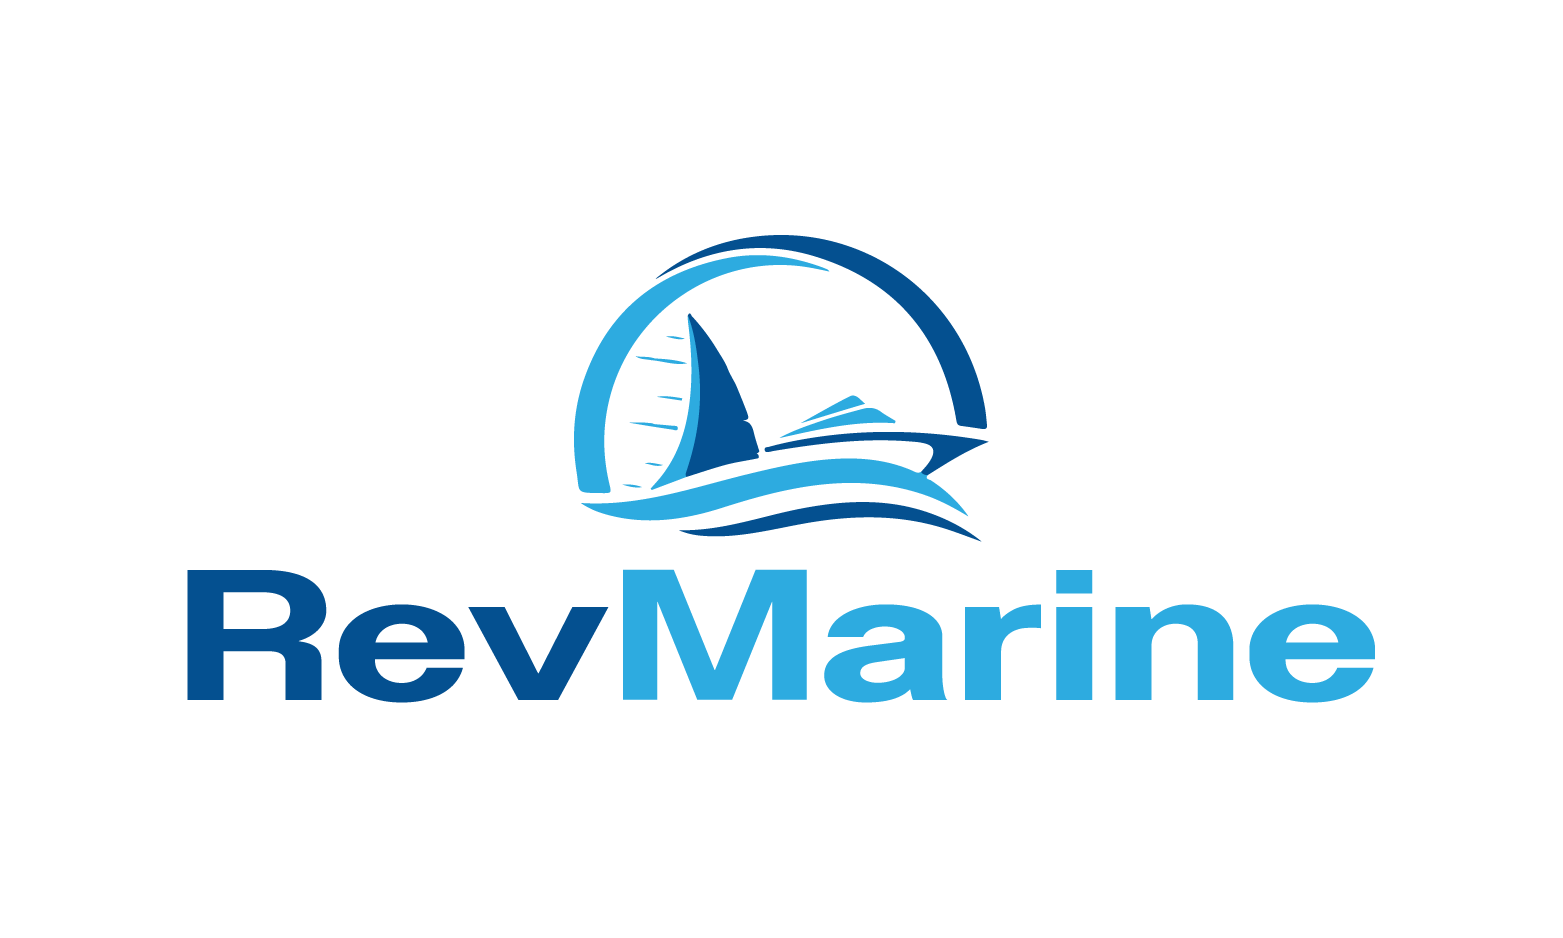 RevMarine.com - Creative brandable domain for sale